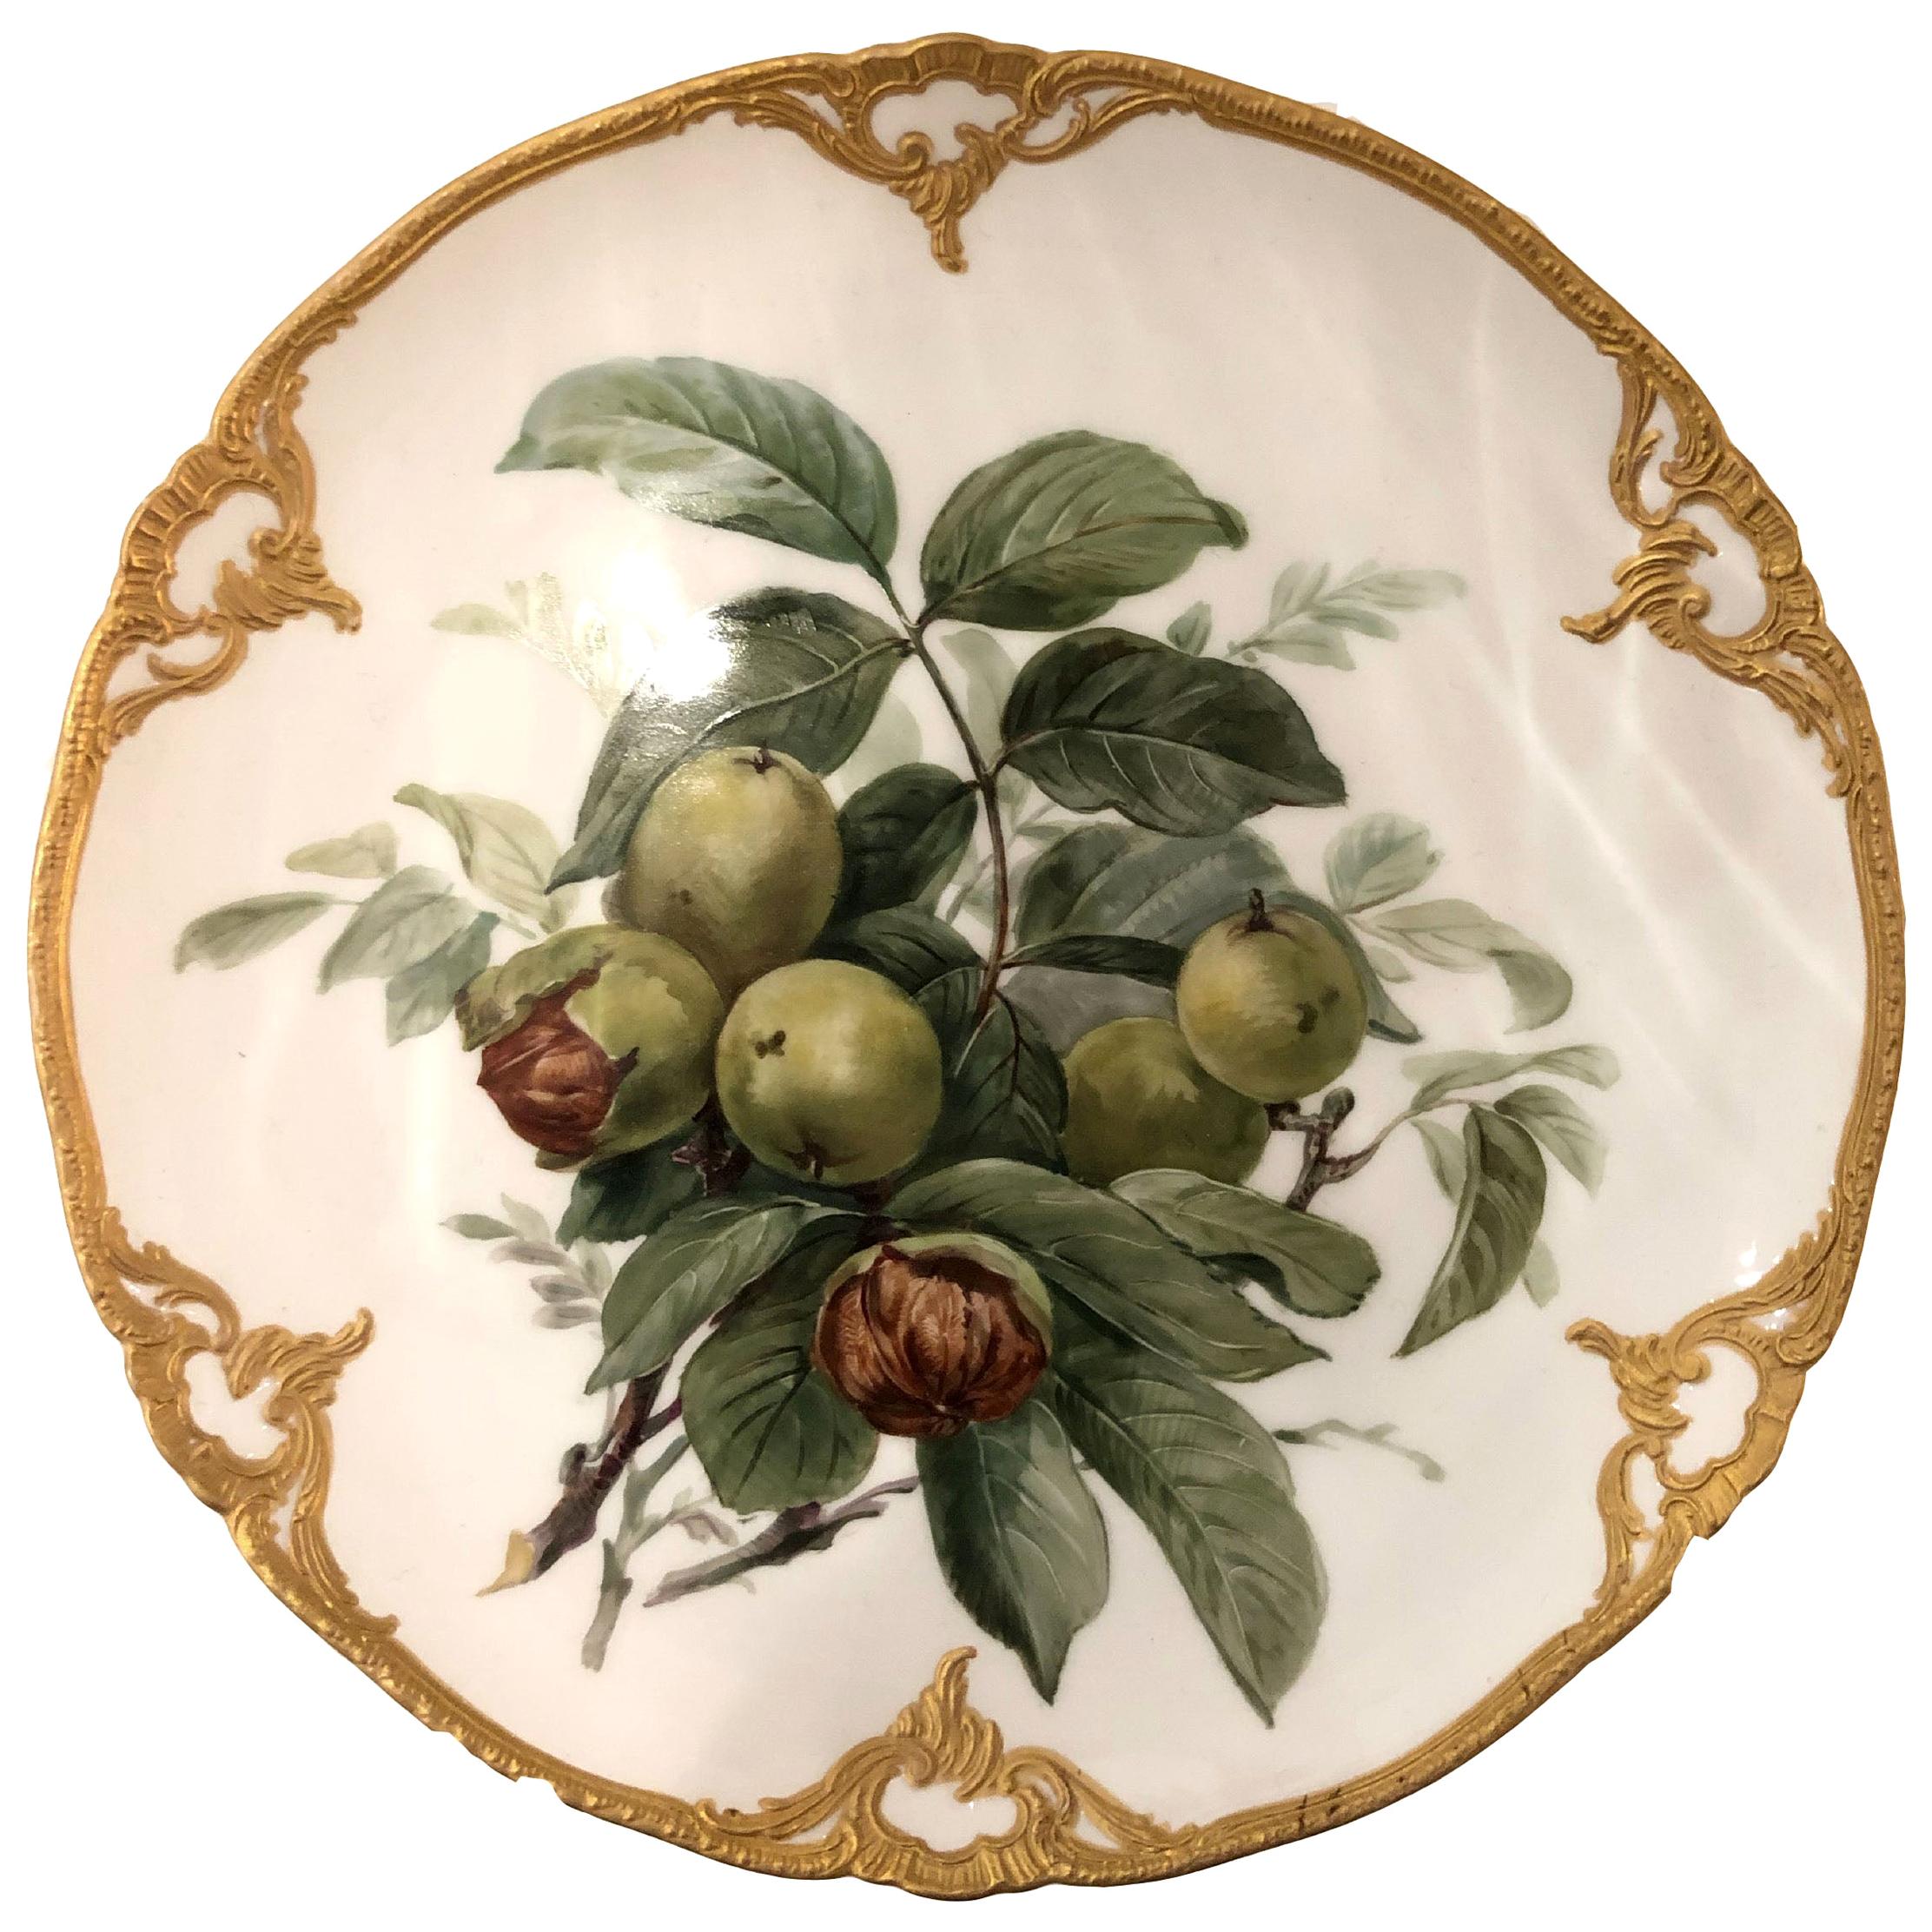 Set of Eight Porcelain Dessert Plates Depicting Fruit with 14k Gold Detail